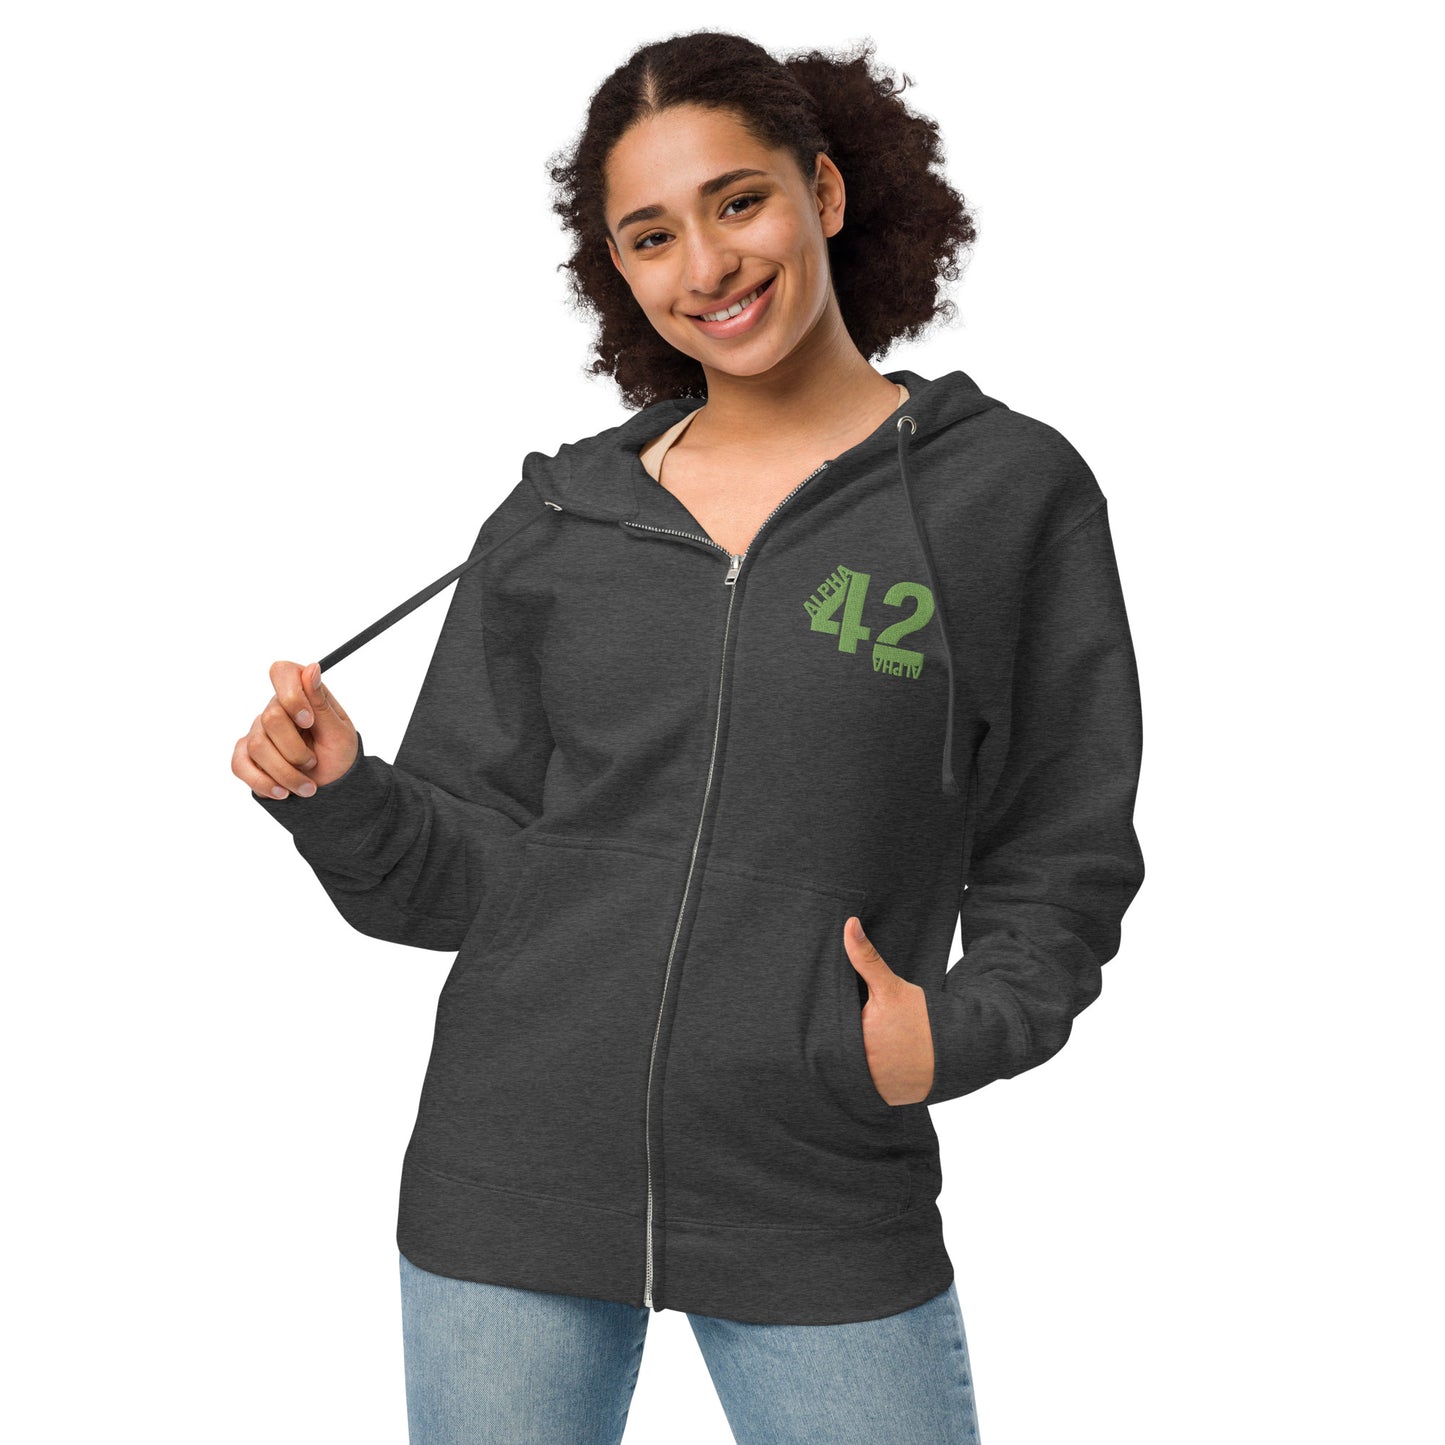 A42A - Unisex fleece zip up hoodie